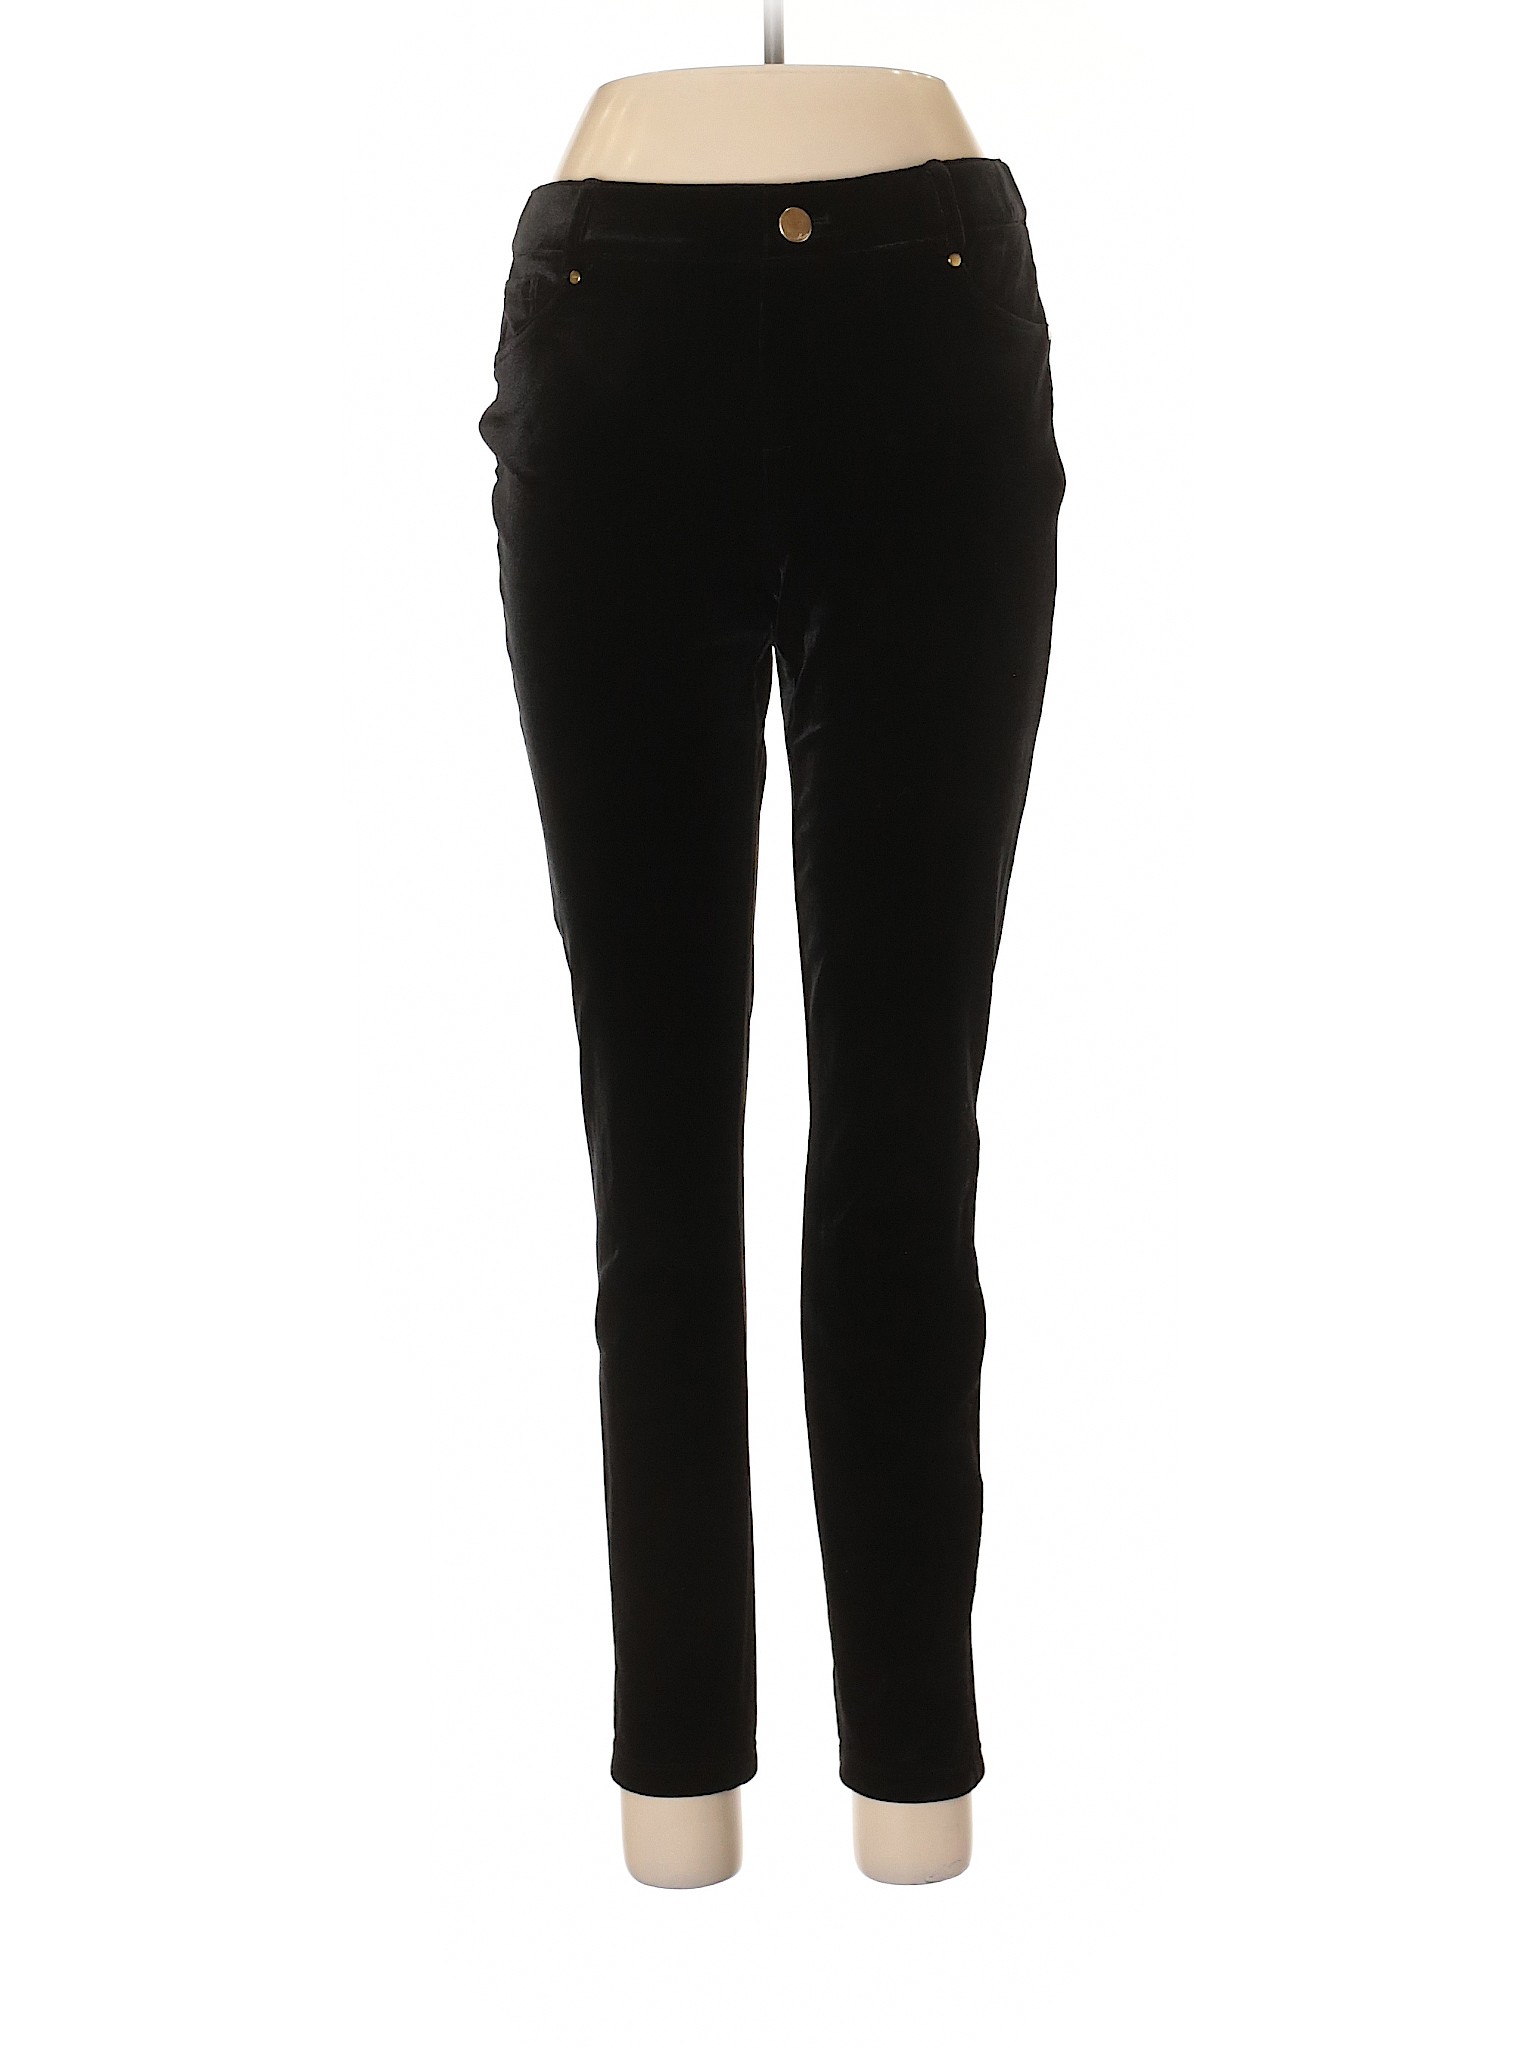 INC International Concepts Women Black Casual Pants 10 Petites | eBay